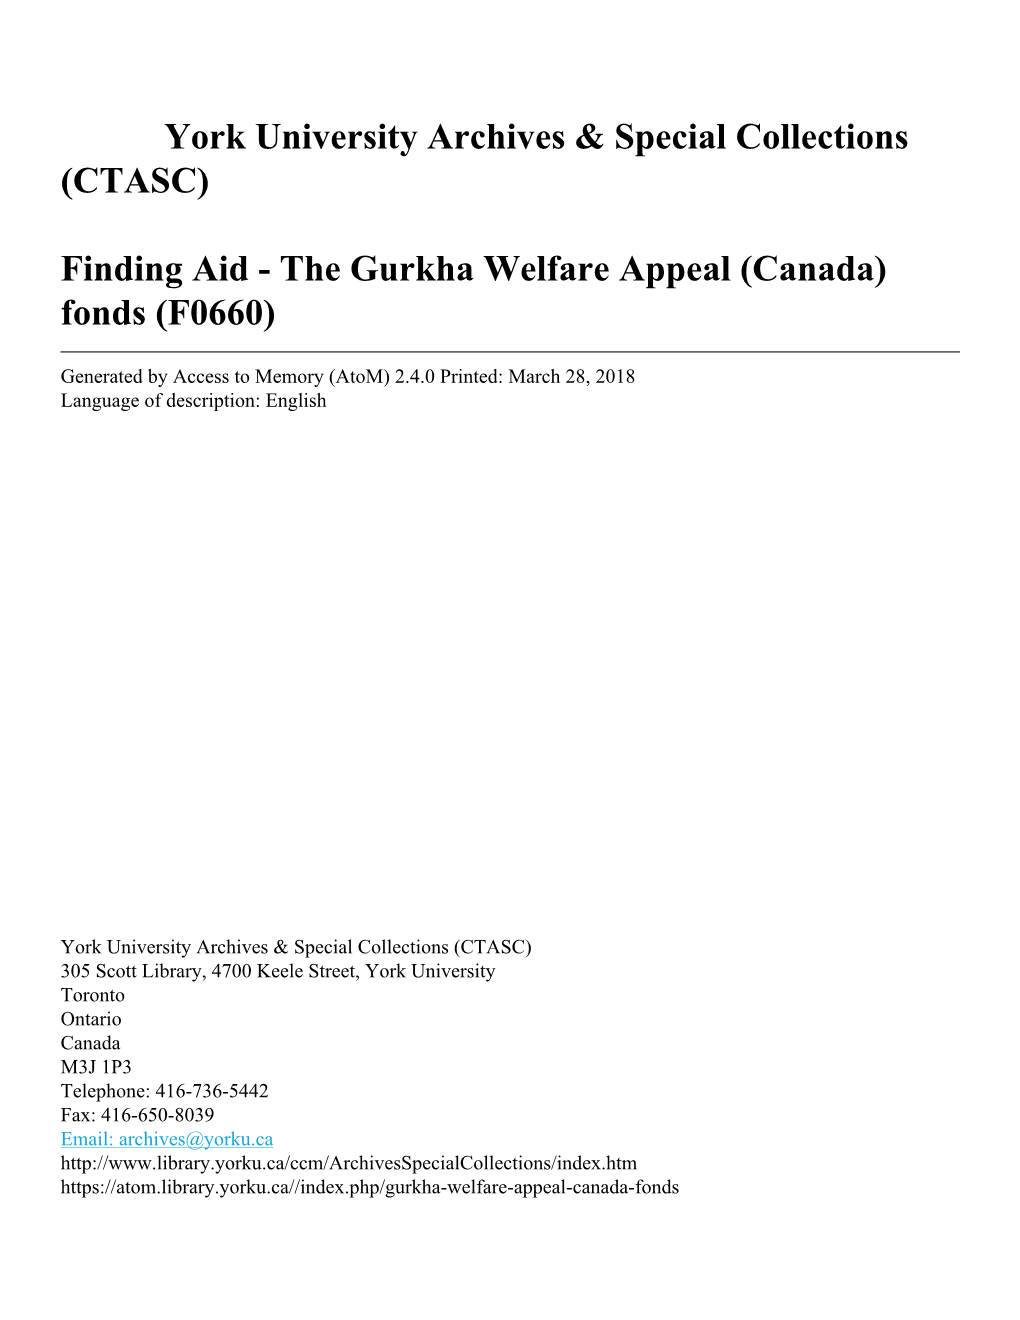 The Gurkha Welfare Appeal (Canada) Fonds (F0660)